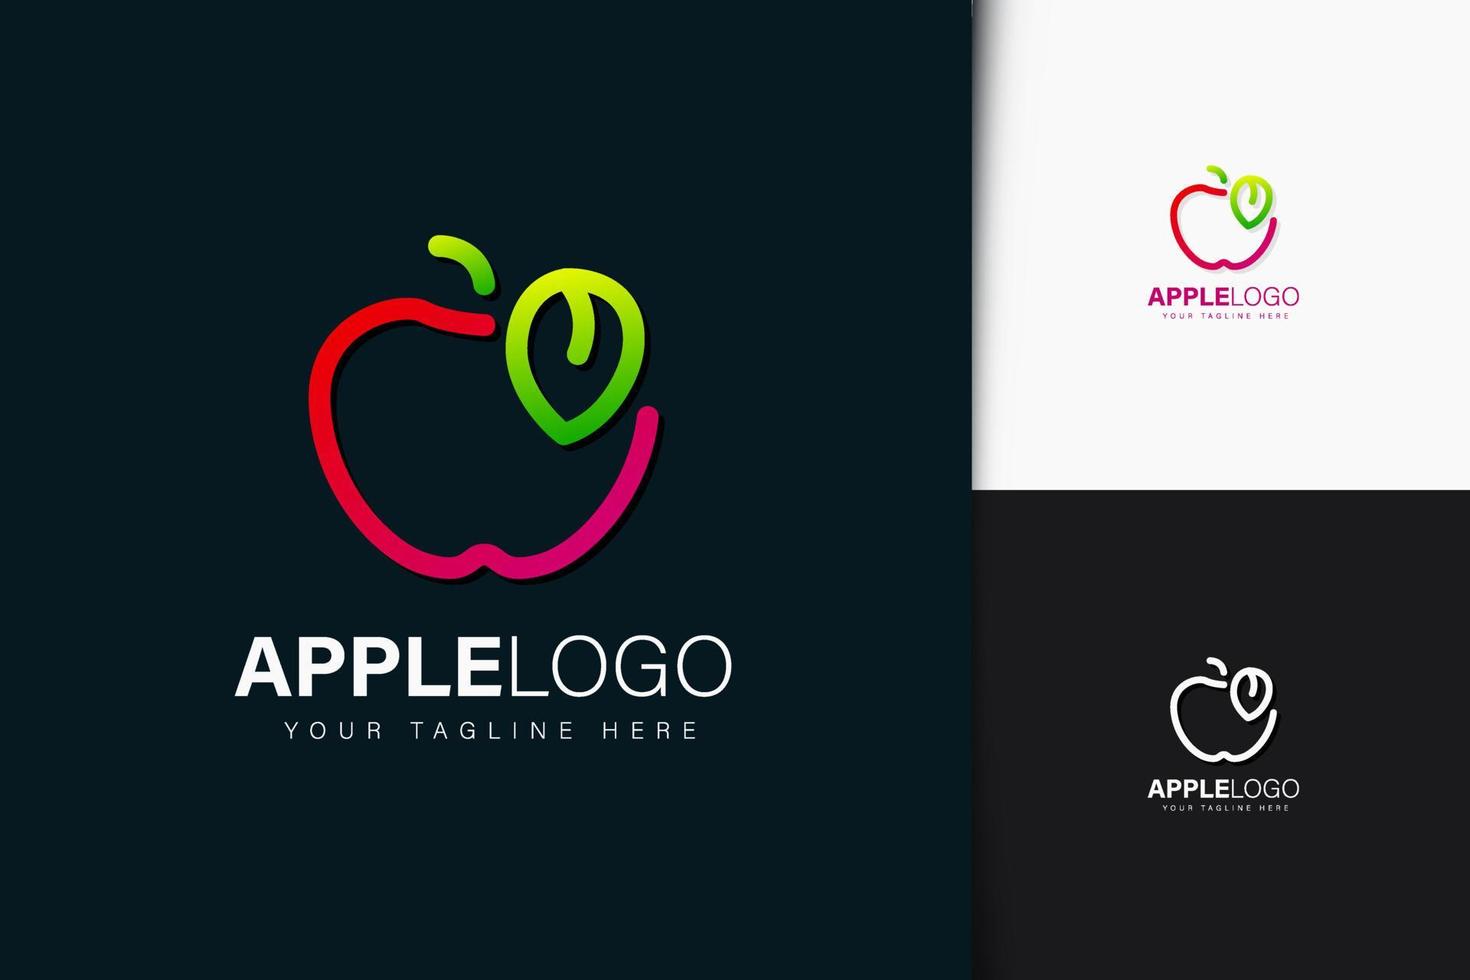 Apple logo design with gradient vector